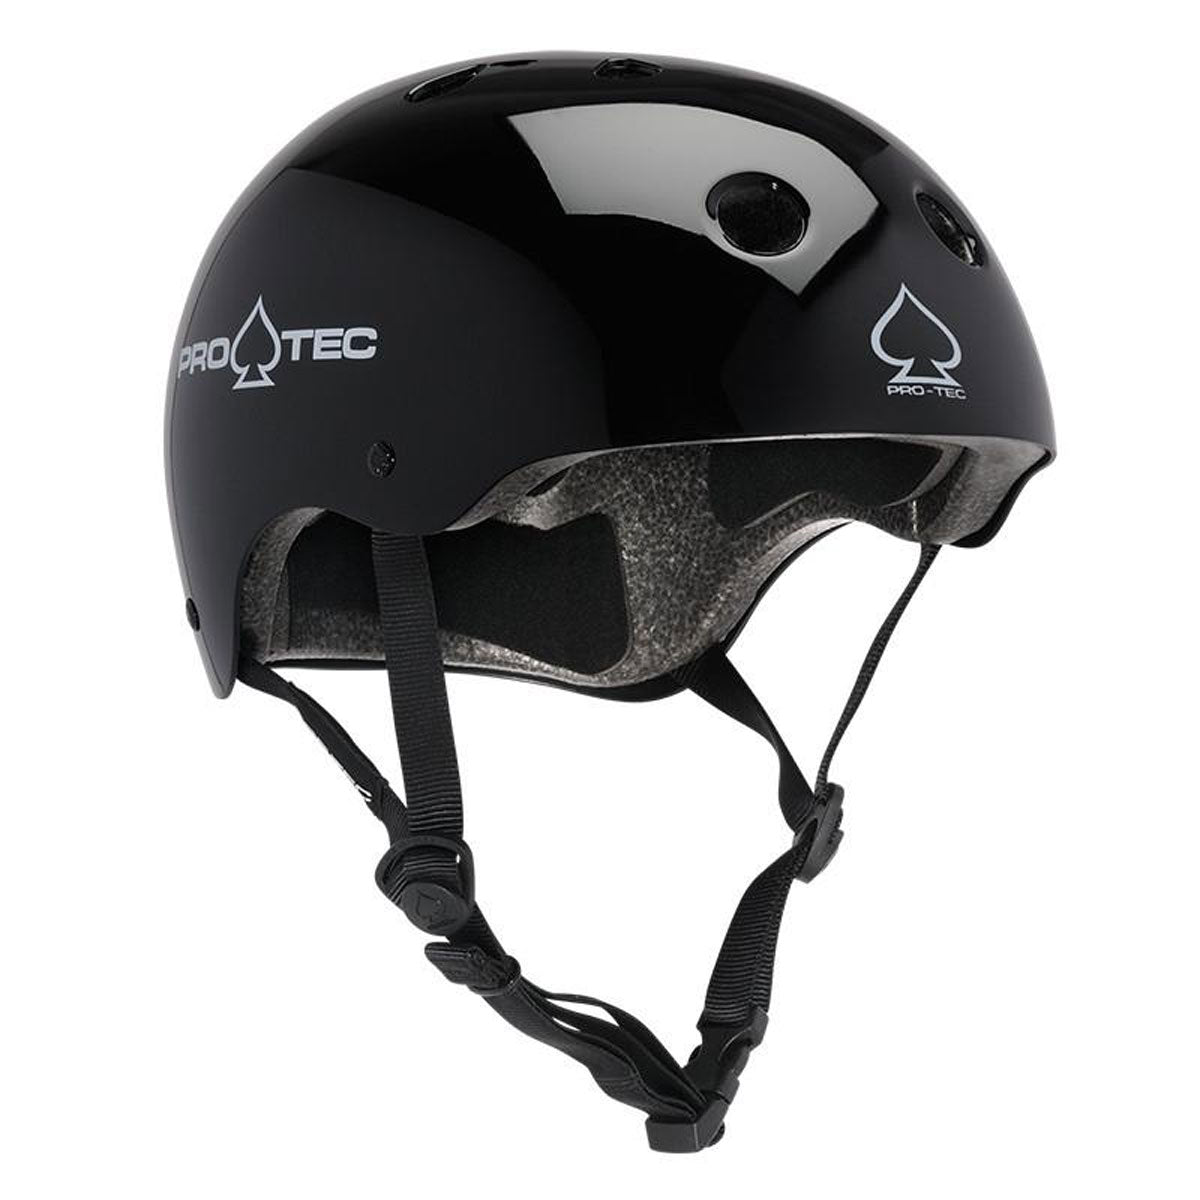 Pro-Tec The Classic Certified Helmet - Gloss Black image 1